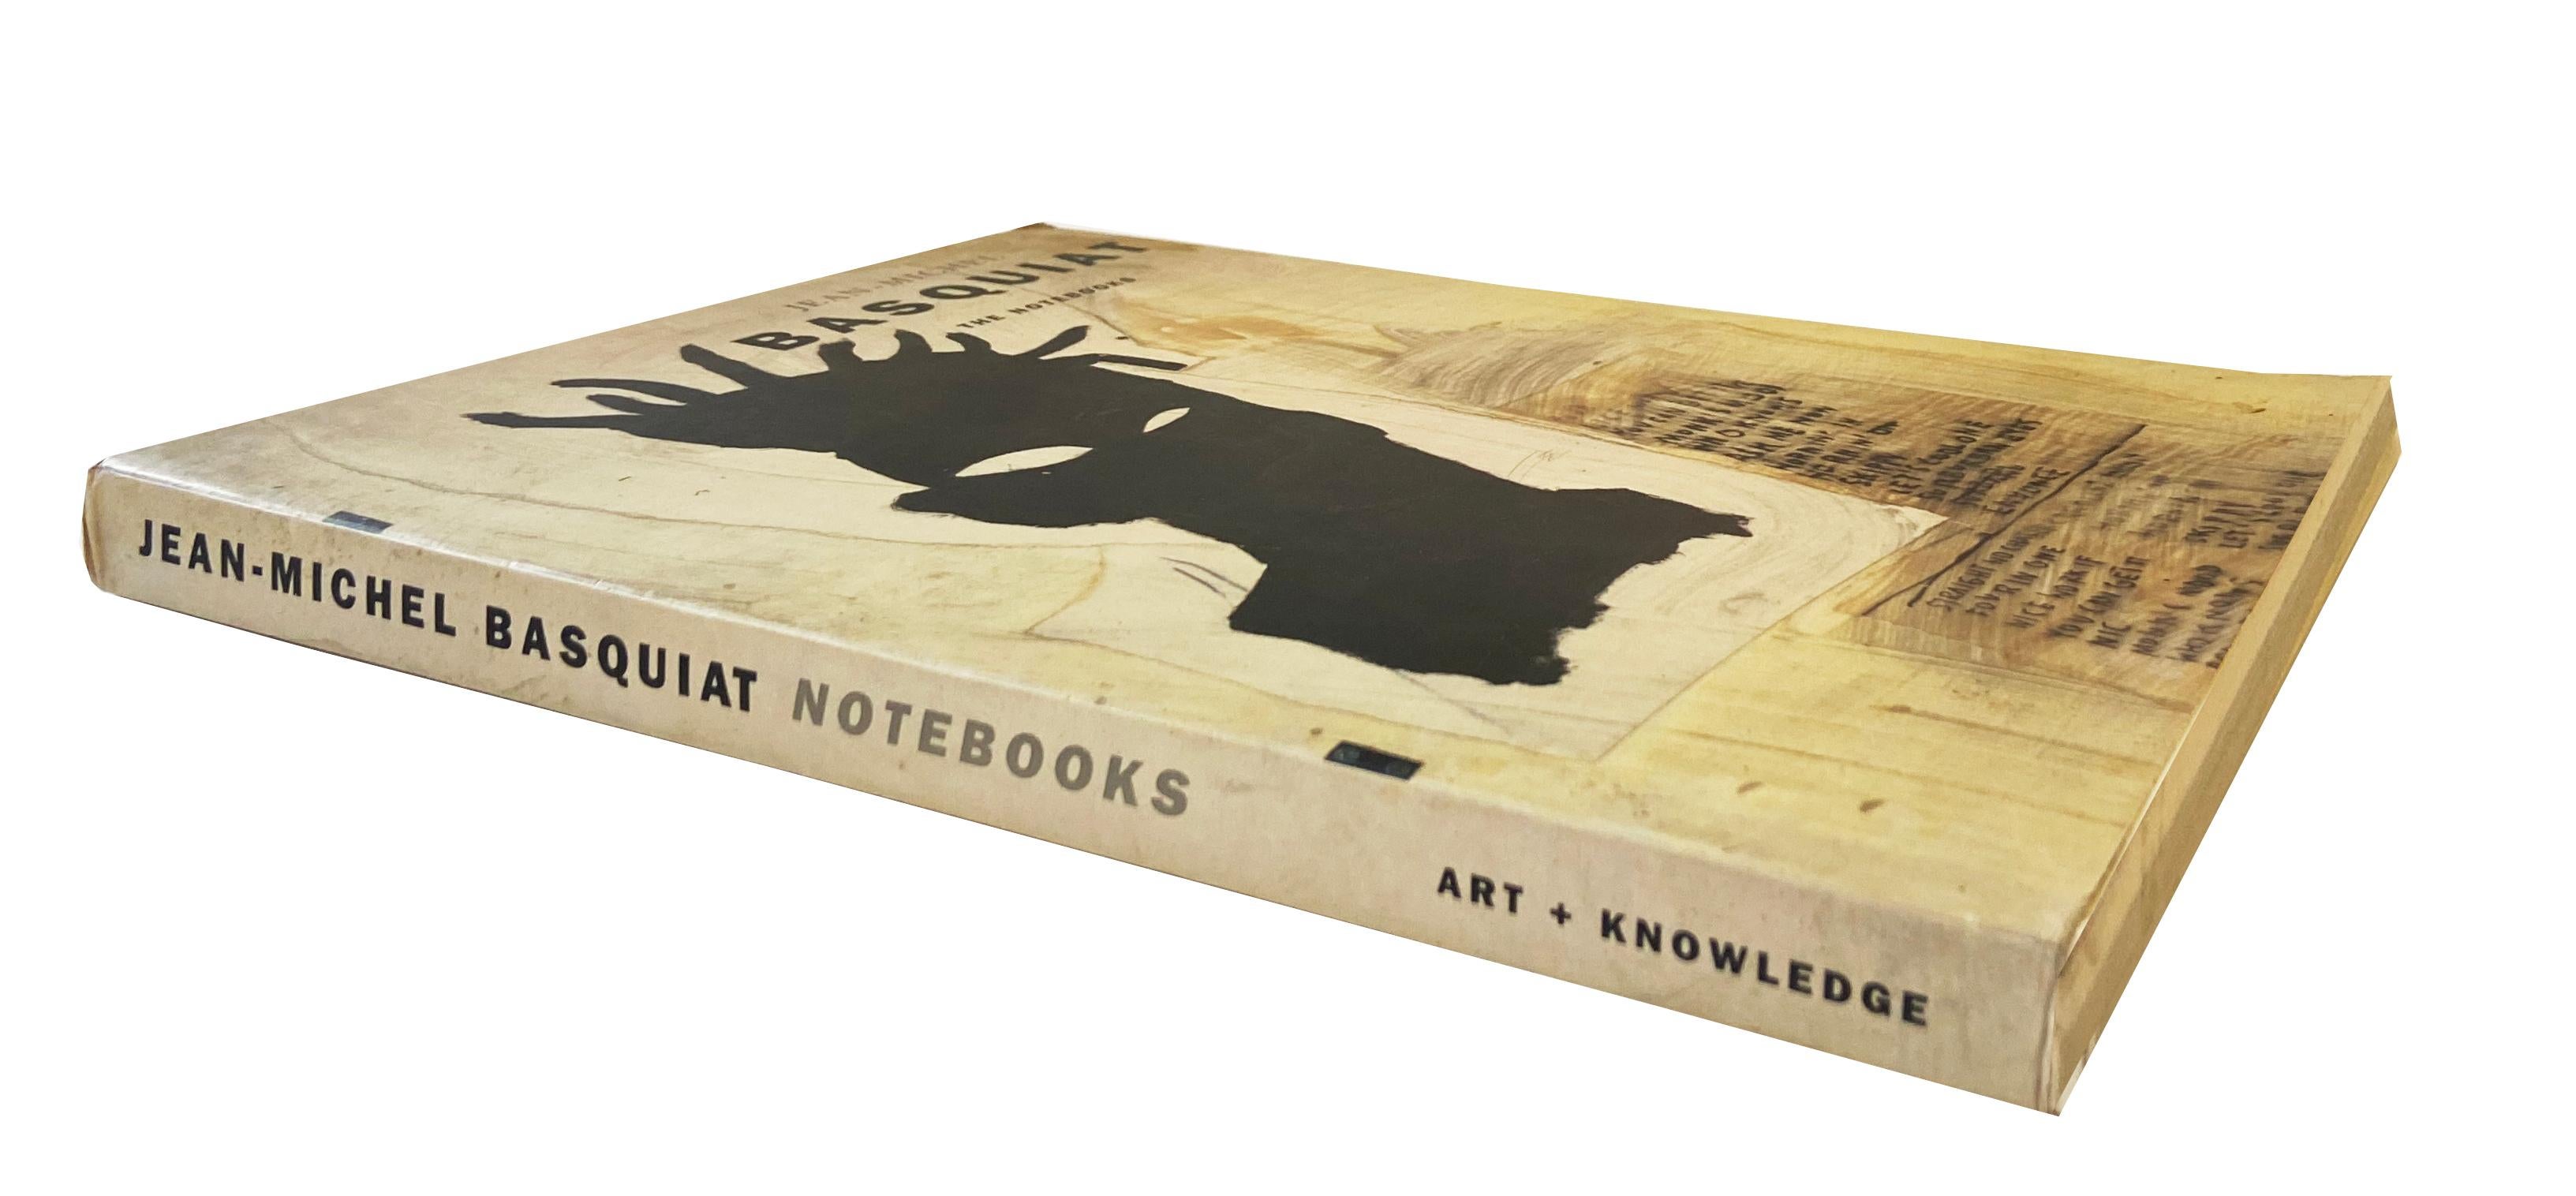 the notebooks basquiat